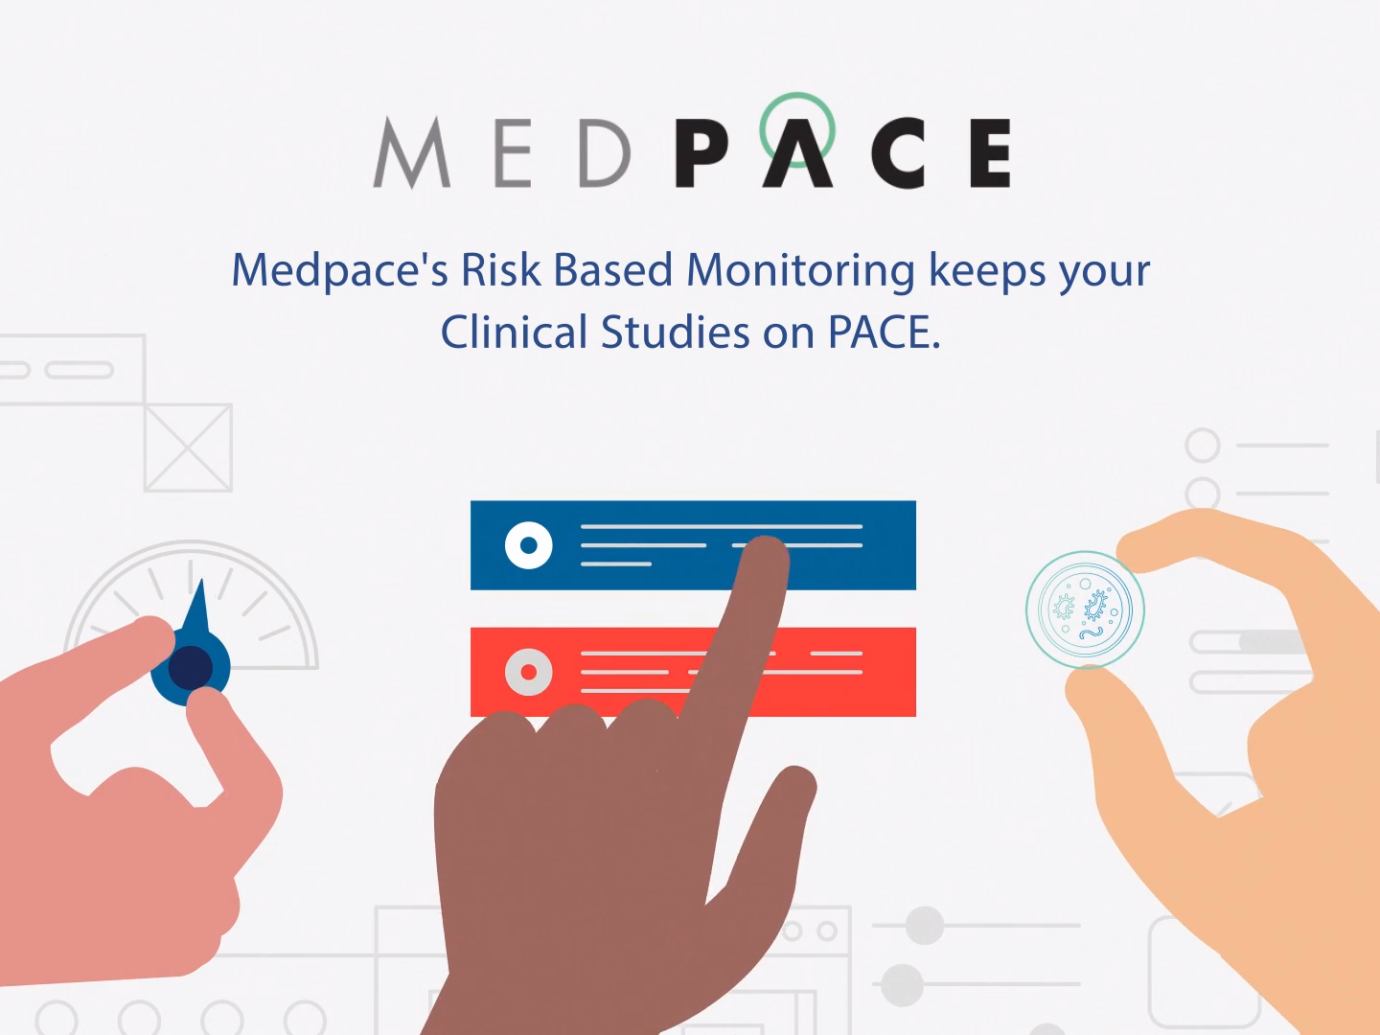 Medpace's Risk Based Monitoring